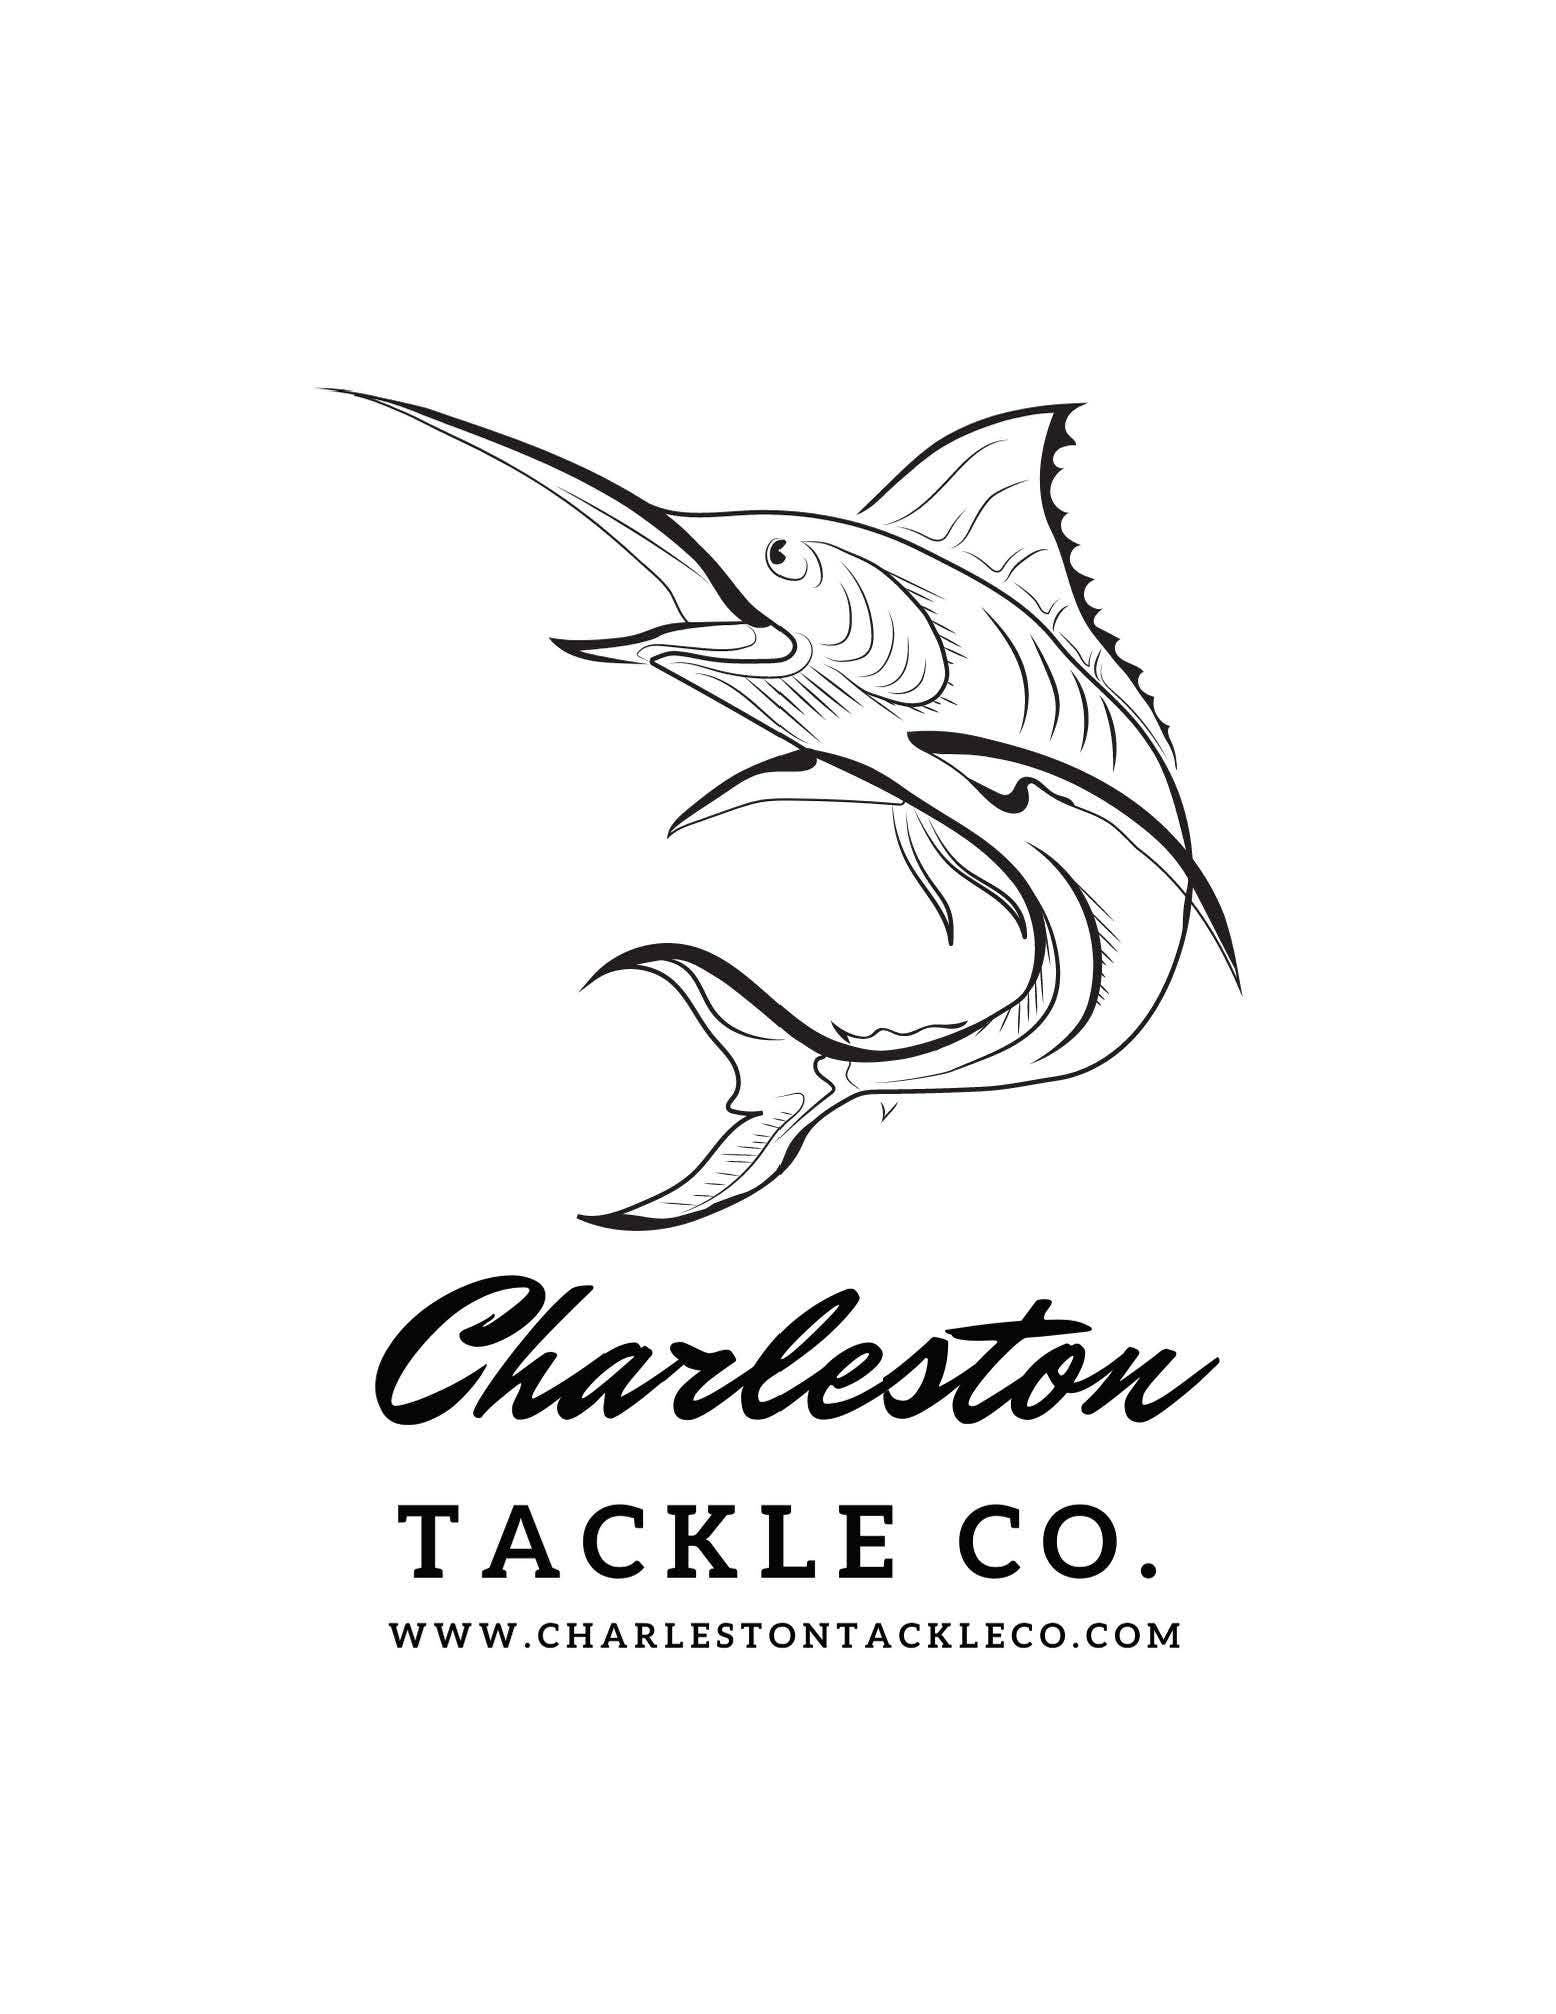 Wholesale Coastal Charleston Harbor Long Sleeve PFG Fishing Shirt